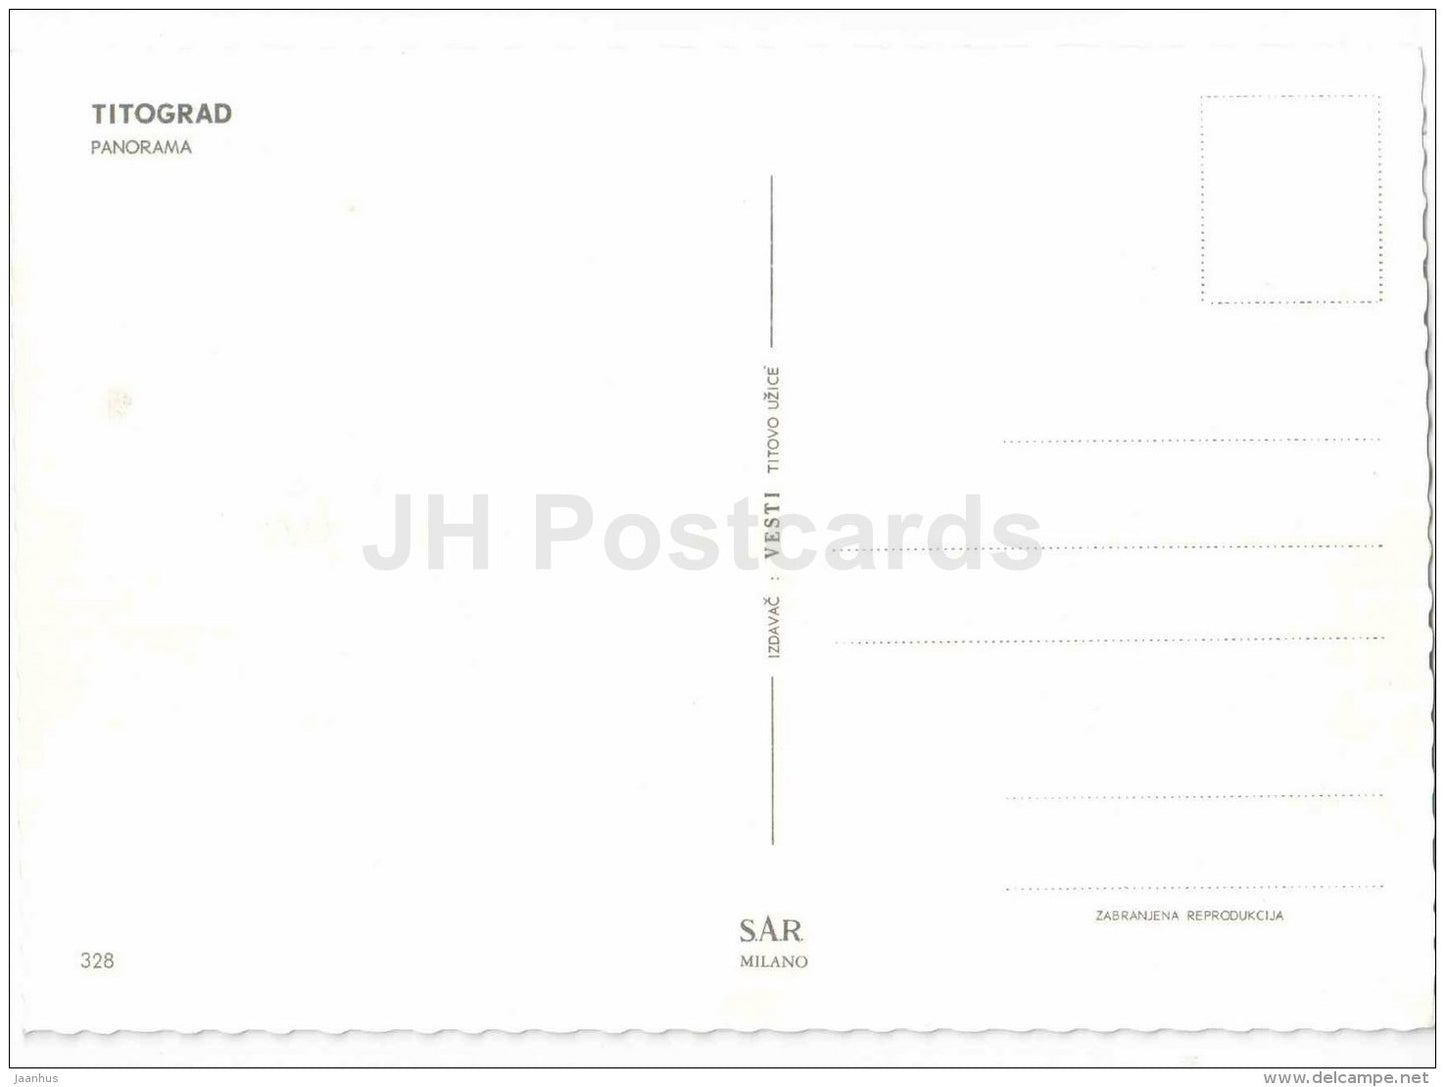 panorama - Titograd - Podgorica - 328 - Montenegro - Yugoslavia - unused - JH Postcards